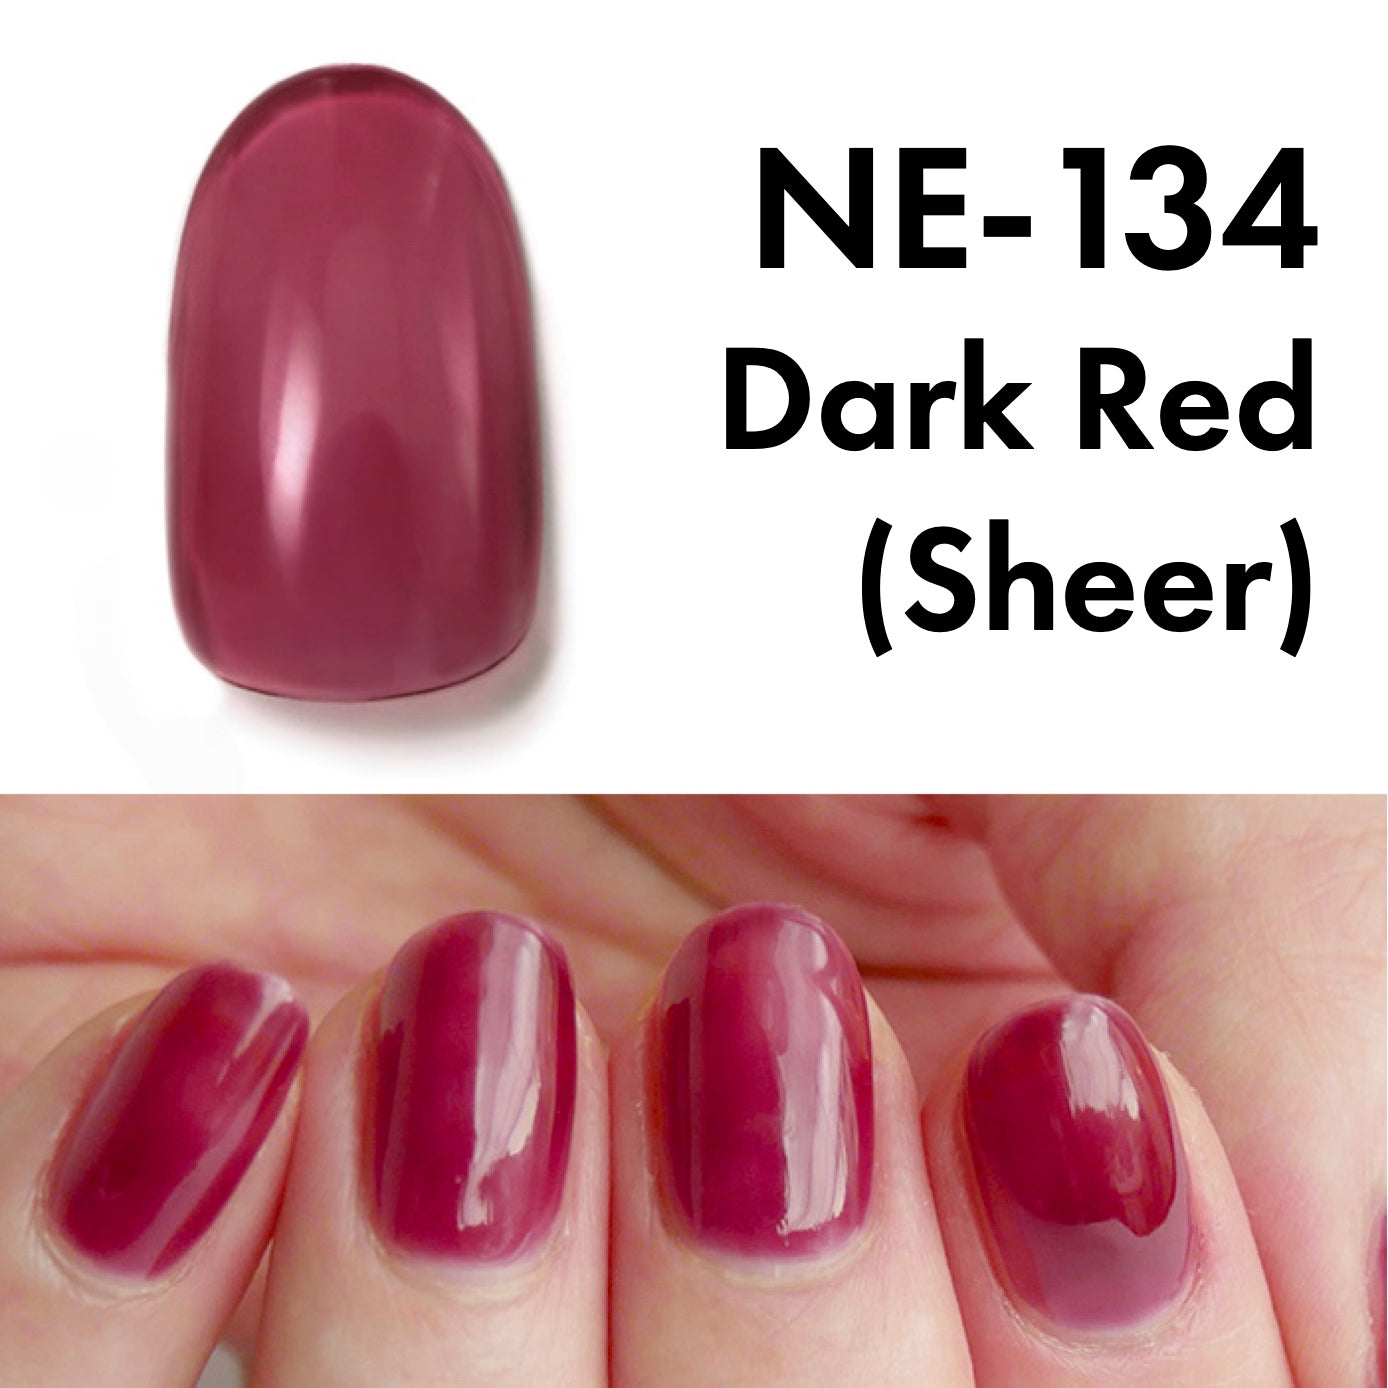 Gel Polish NE-134 "Dark Red"